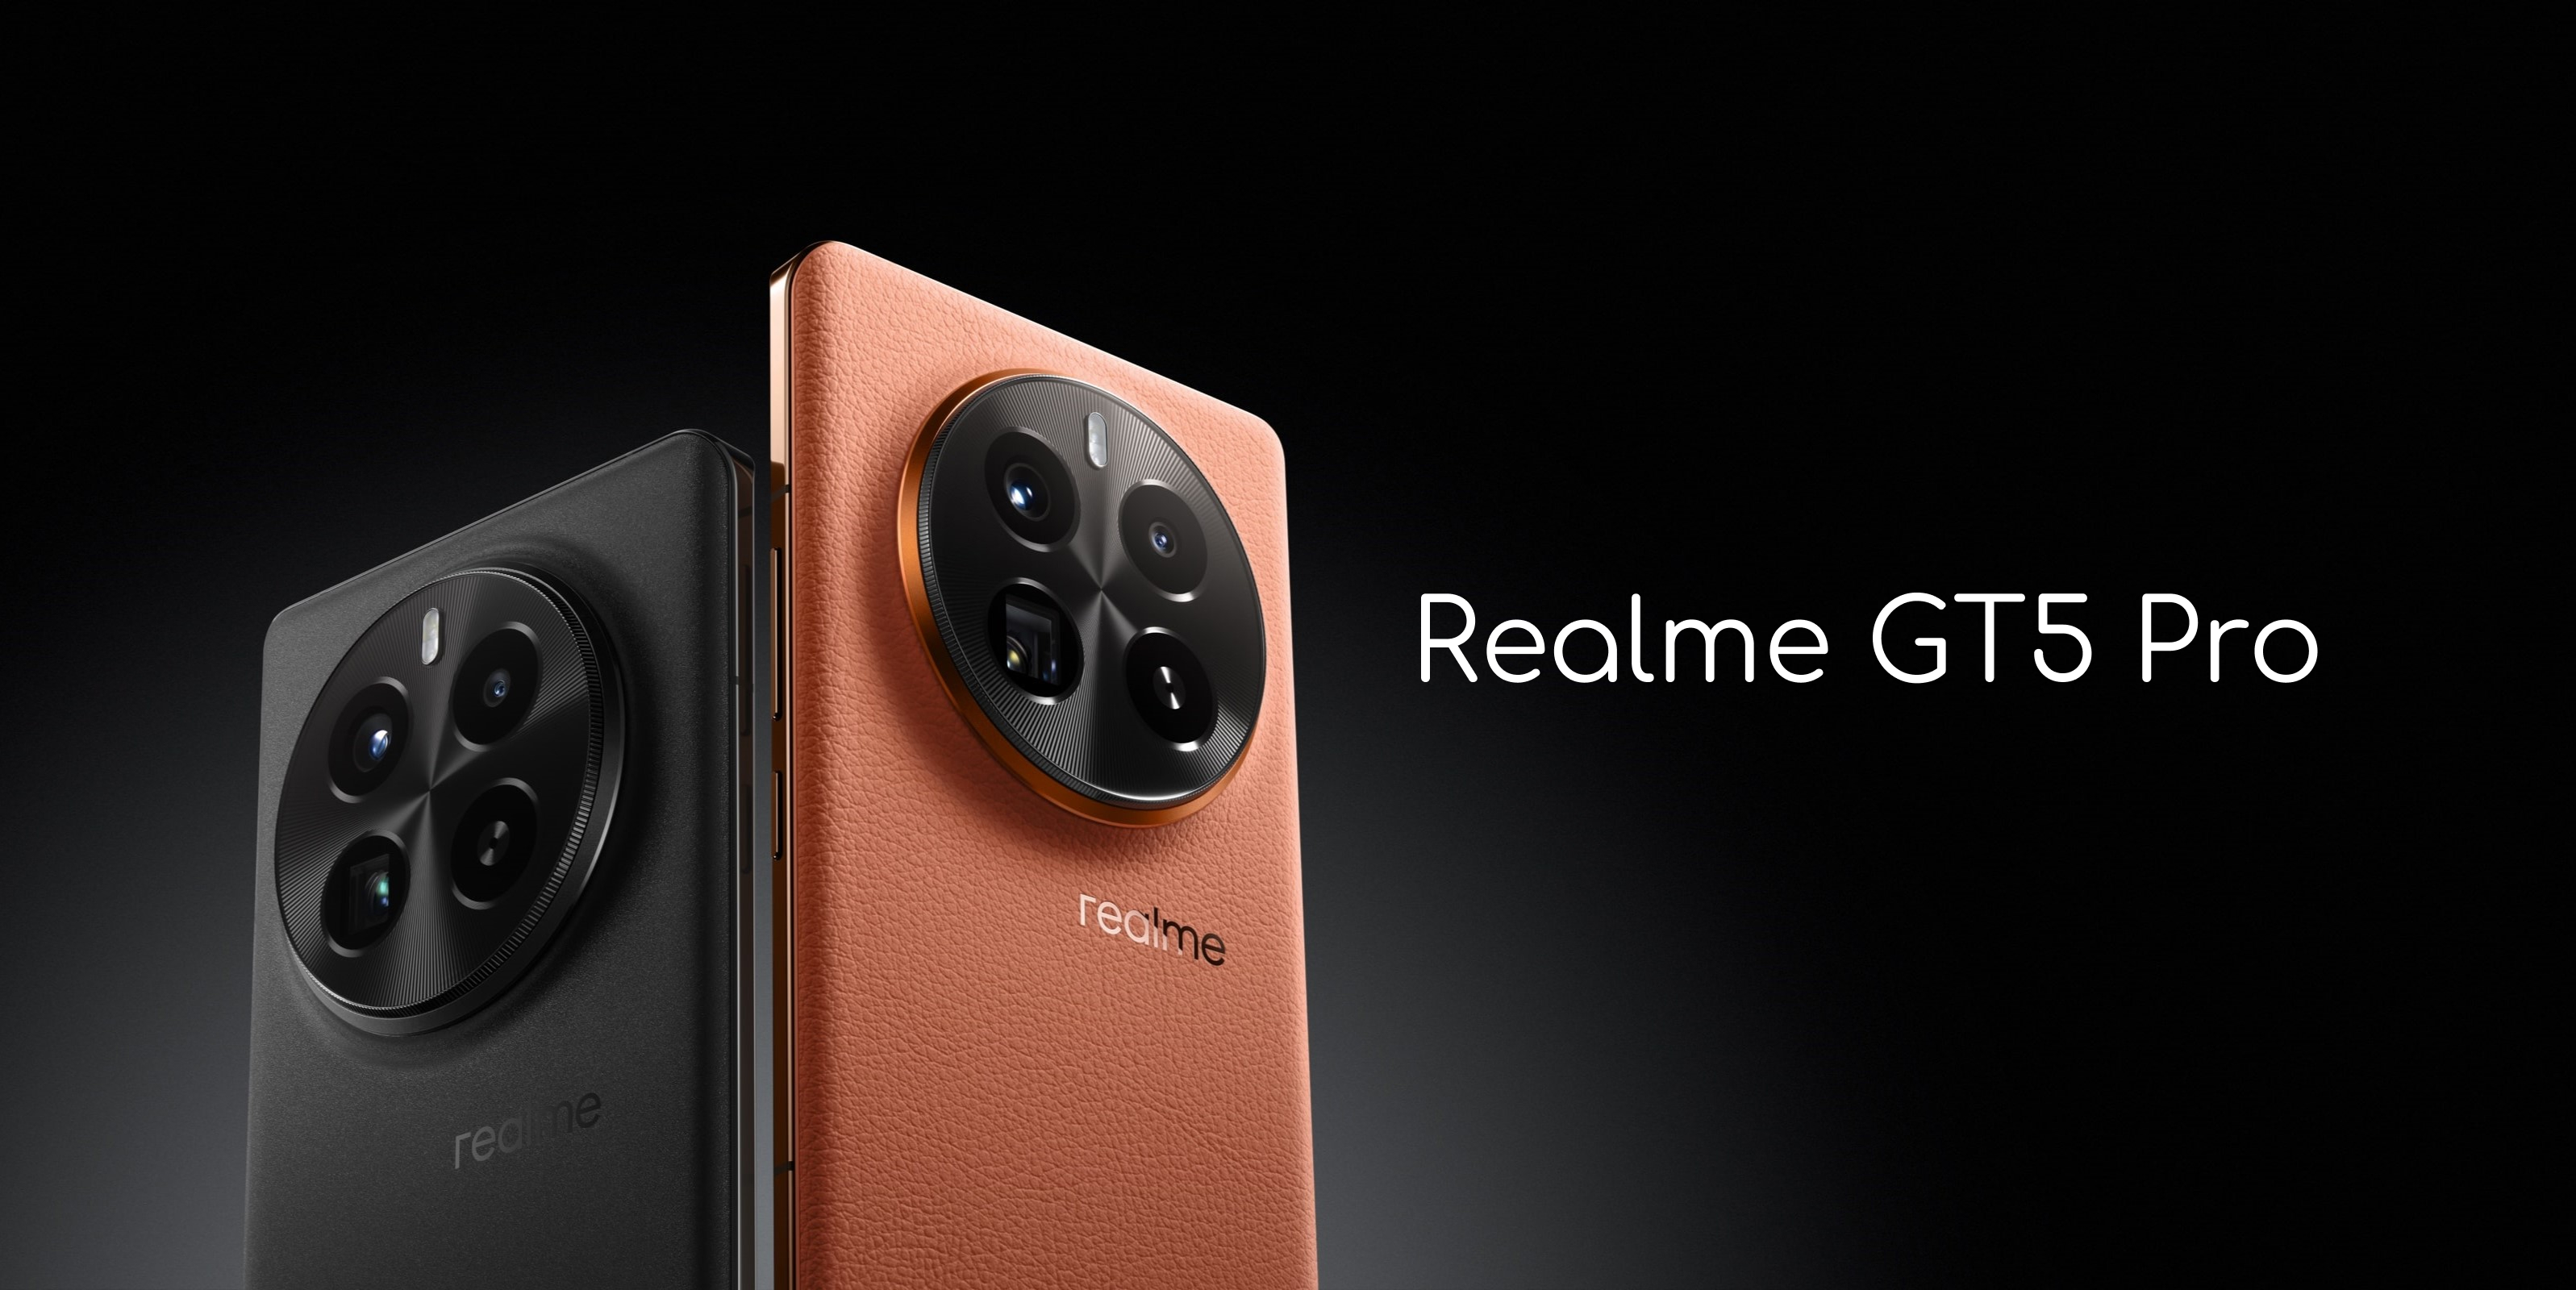 Realme GT5 Pro: Flagship showcasing premium design and performance